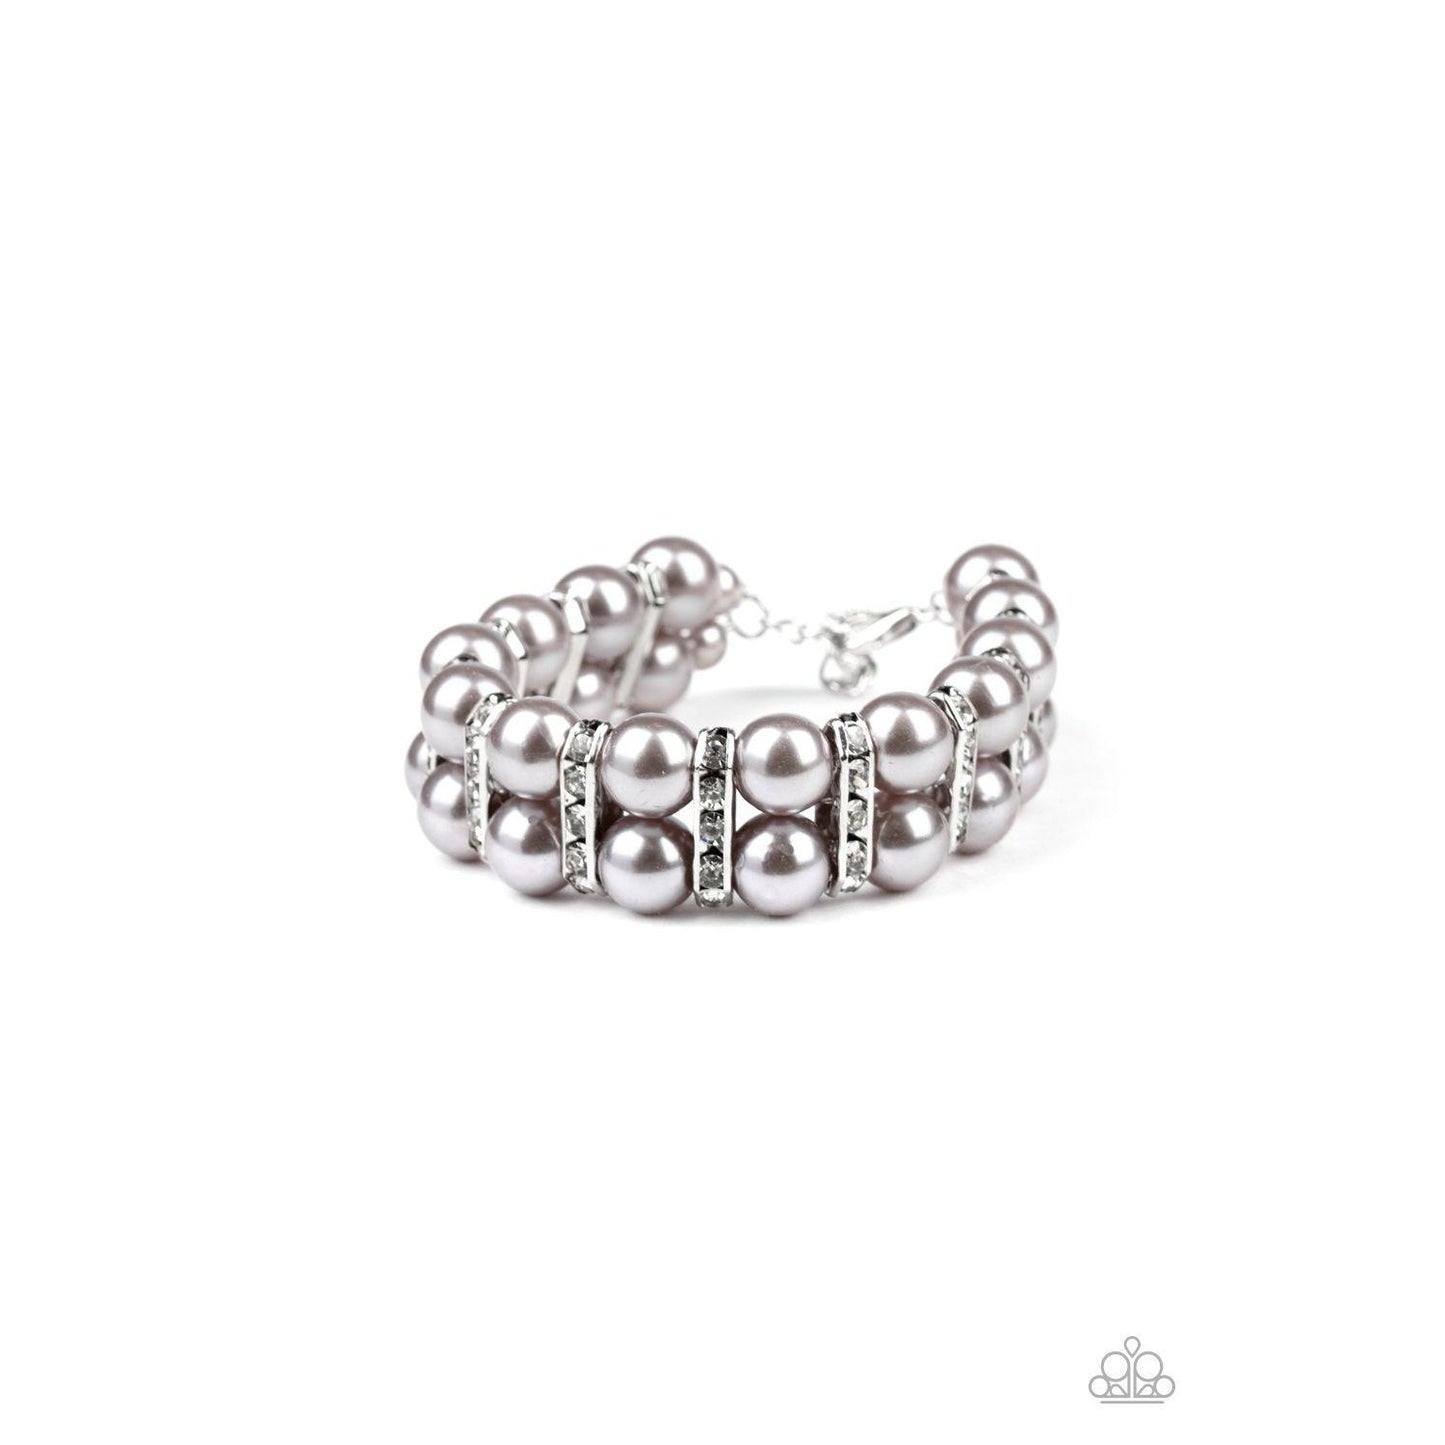 Glowing Glam – Silver Bracelet Paparazzi Jewelry Accessories